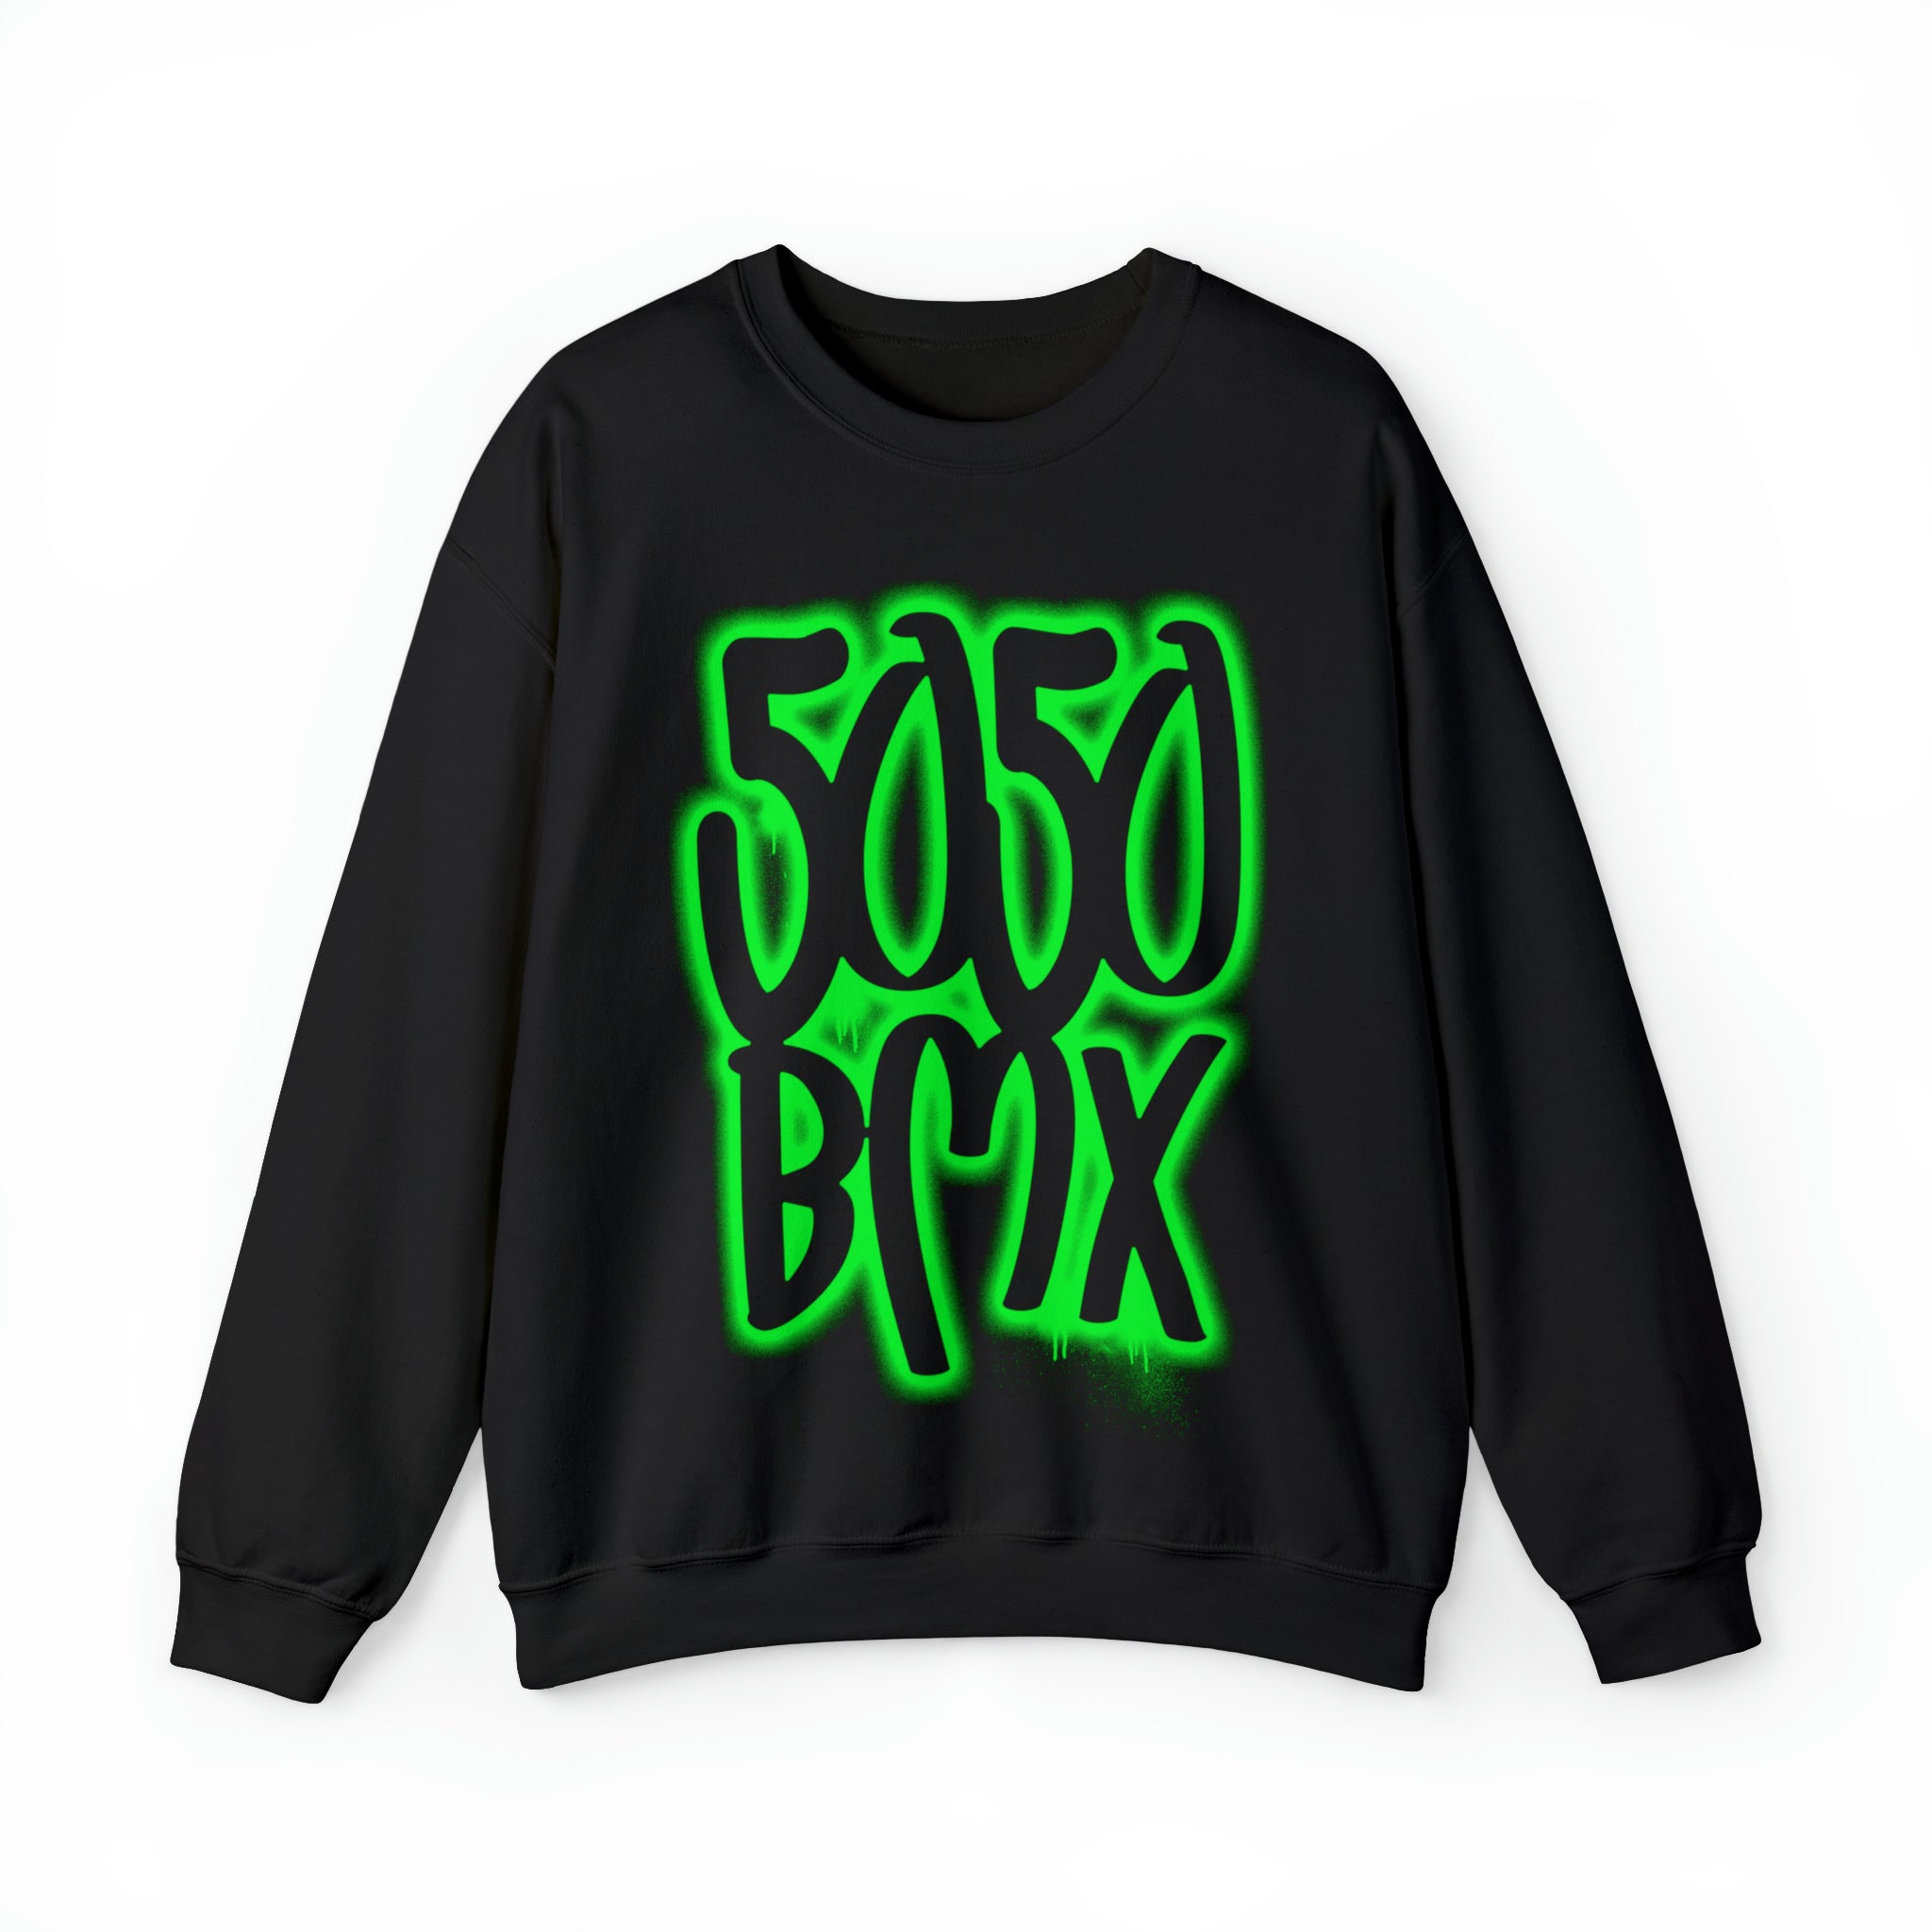 5050bmx Graffiti Crewneck Sweatshirt (Green)